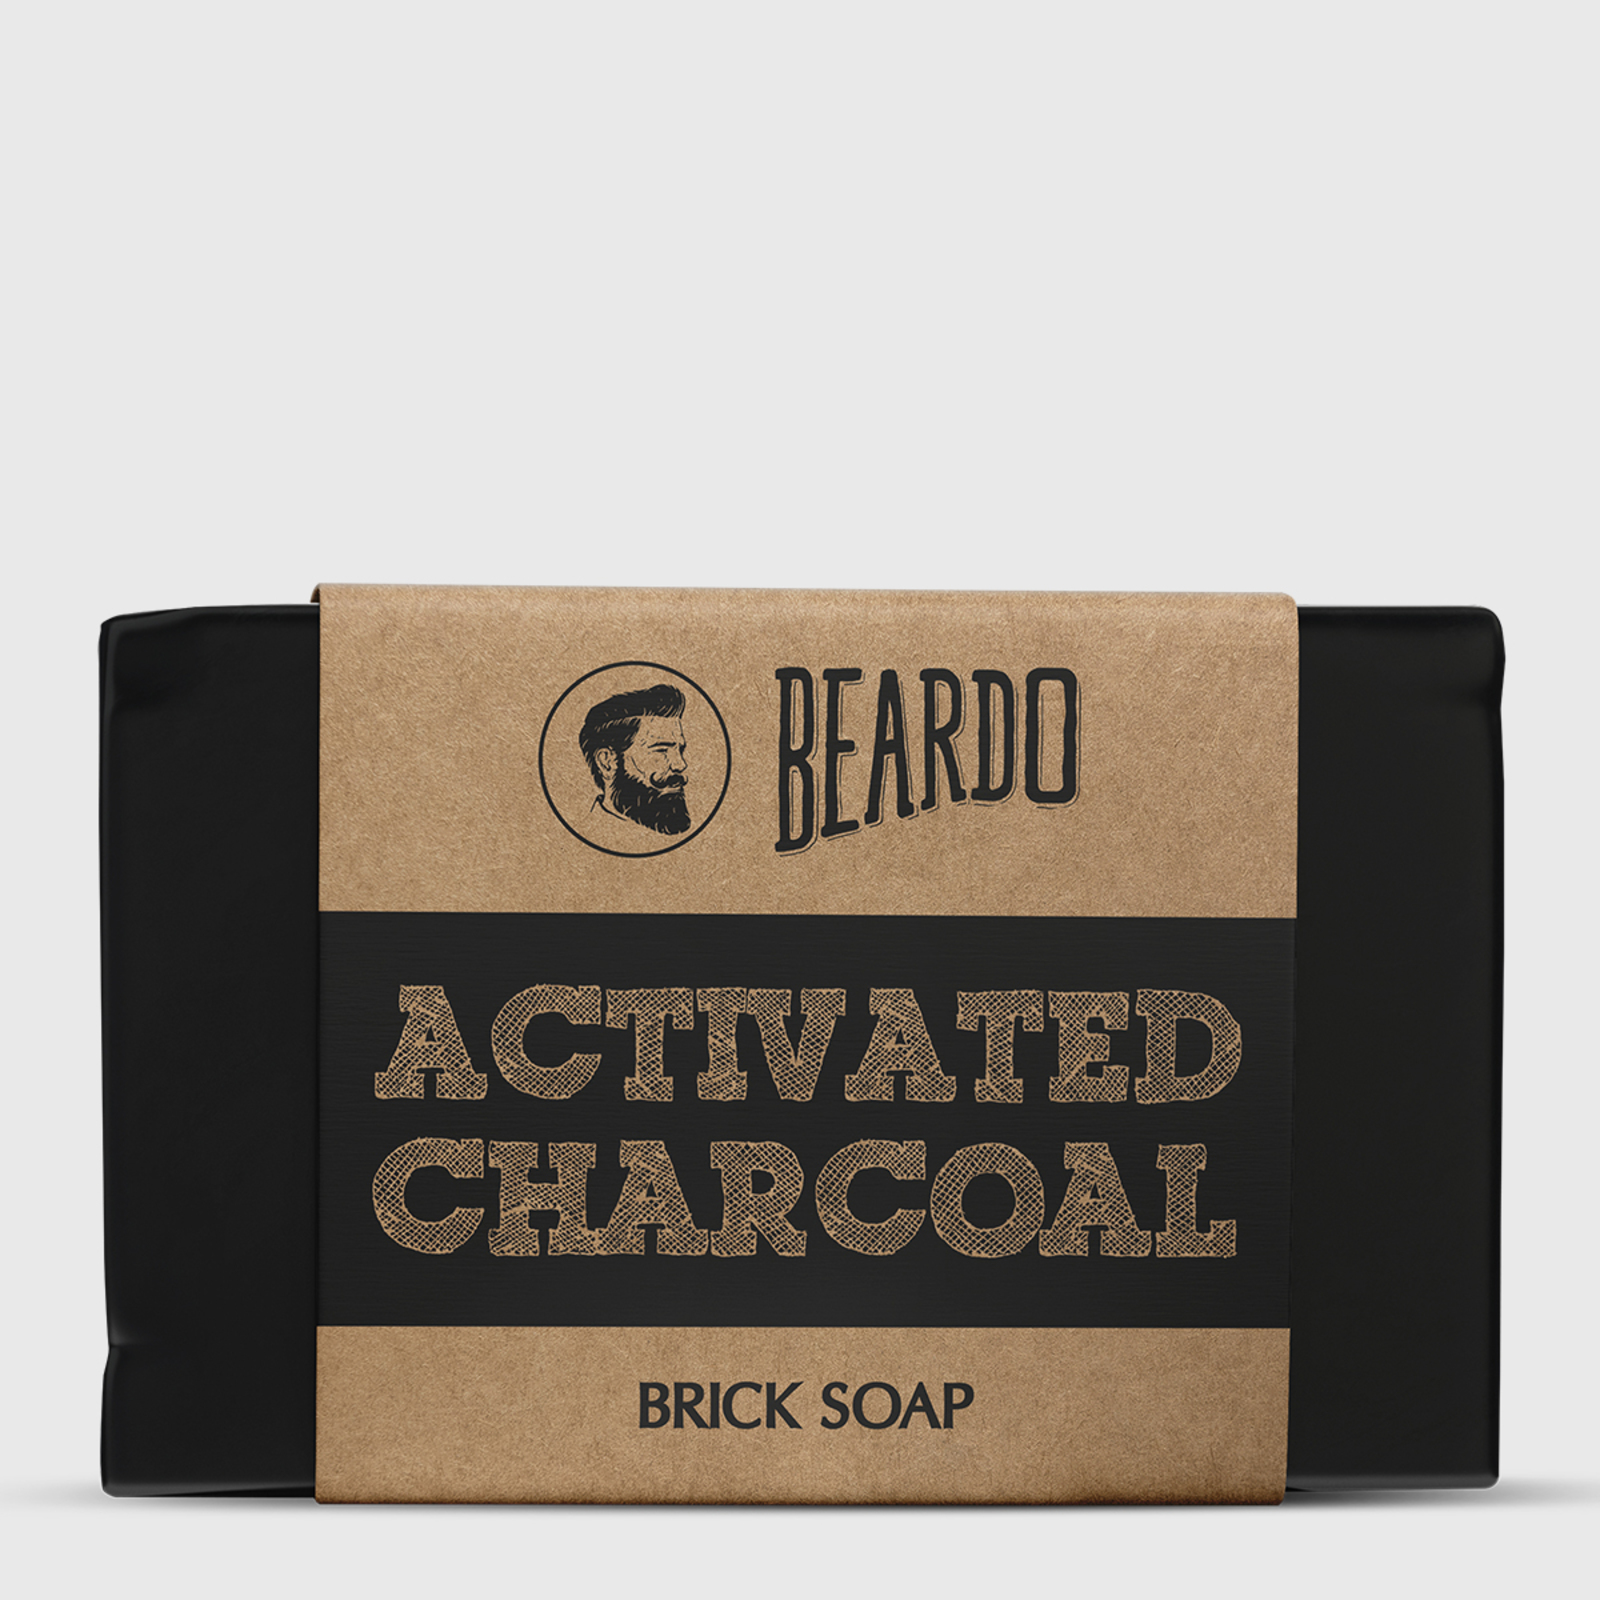 Beardo Activated Charcoal Brick Soap coupon code